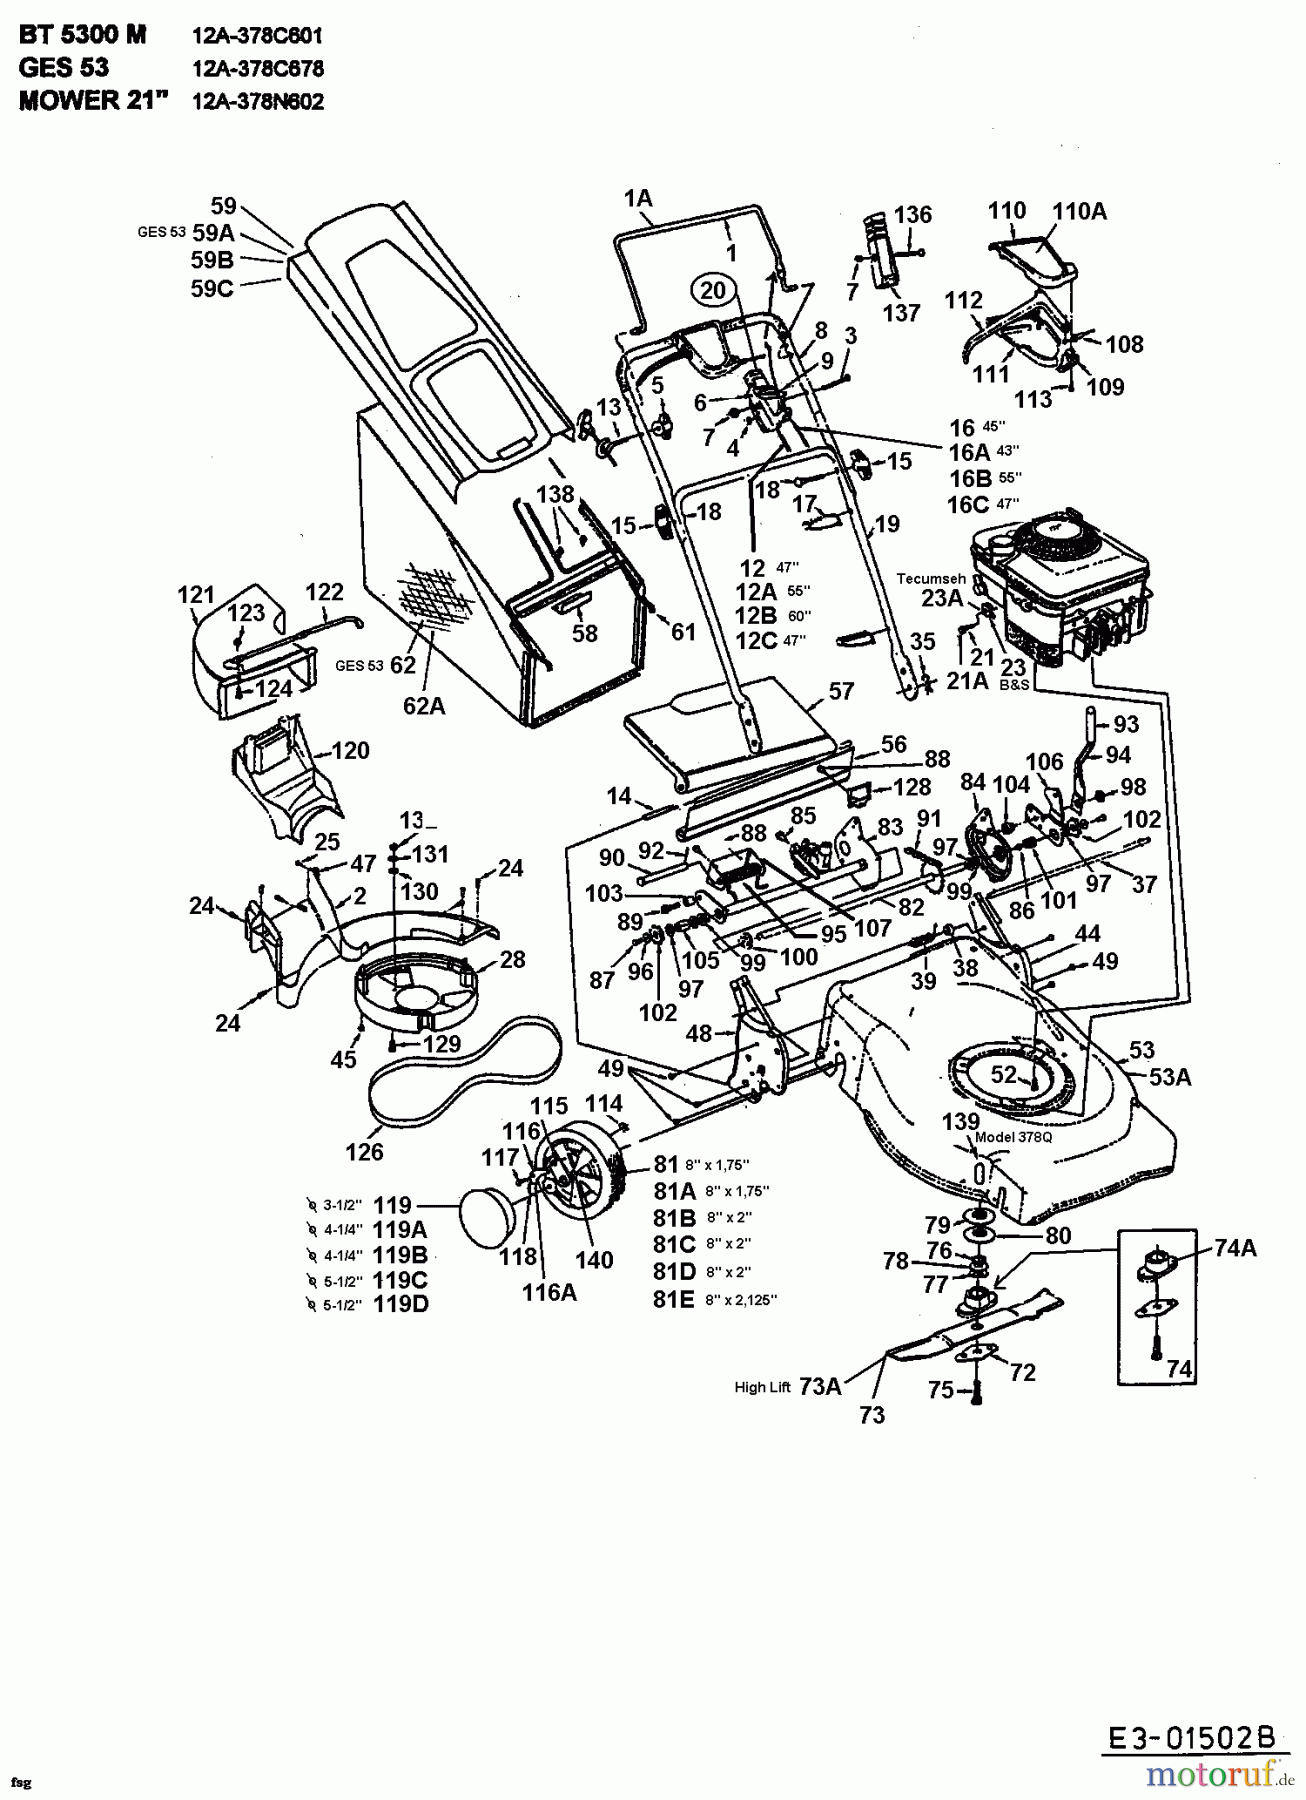  Gutbrod Motormäher mit Antrieb HBM 53 12A-378C604  (1998) Grundgerät